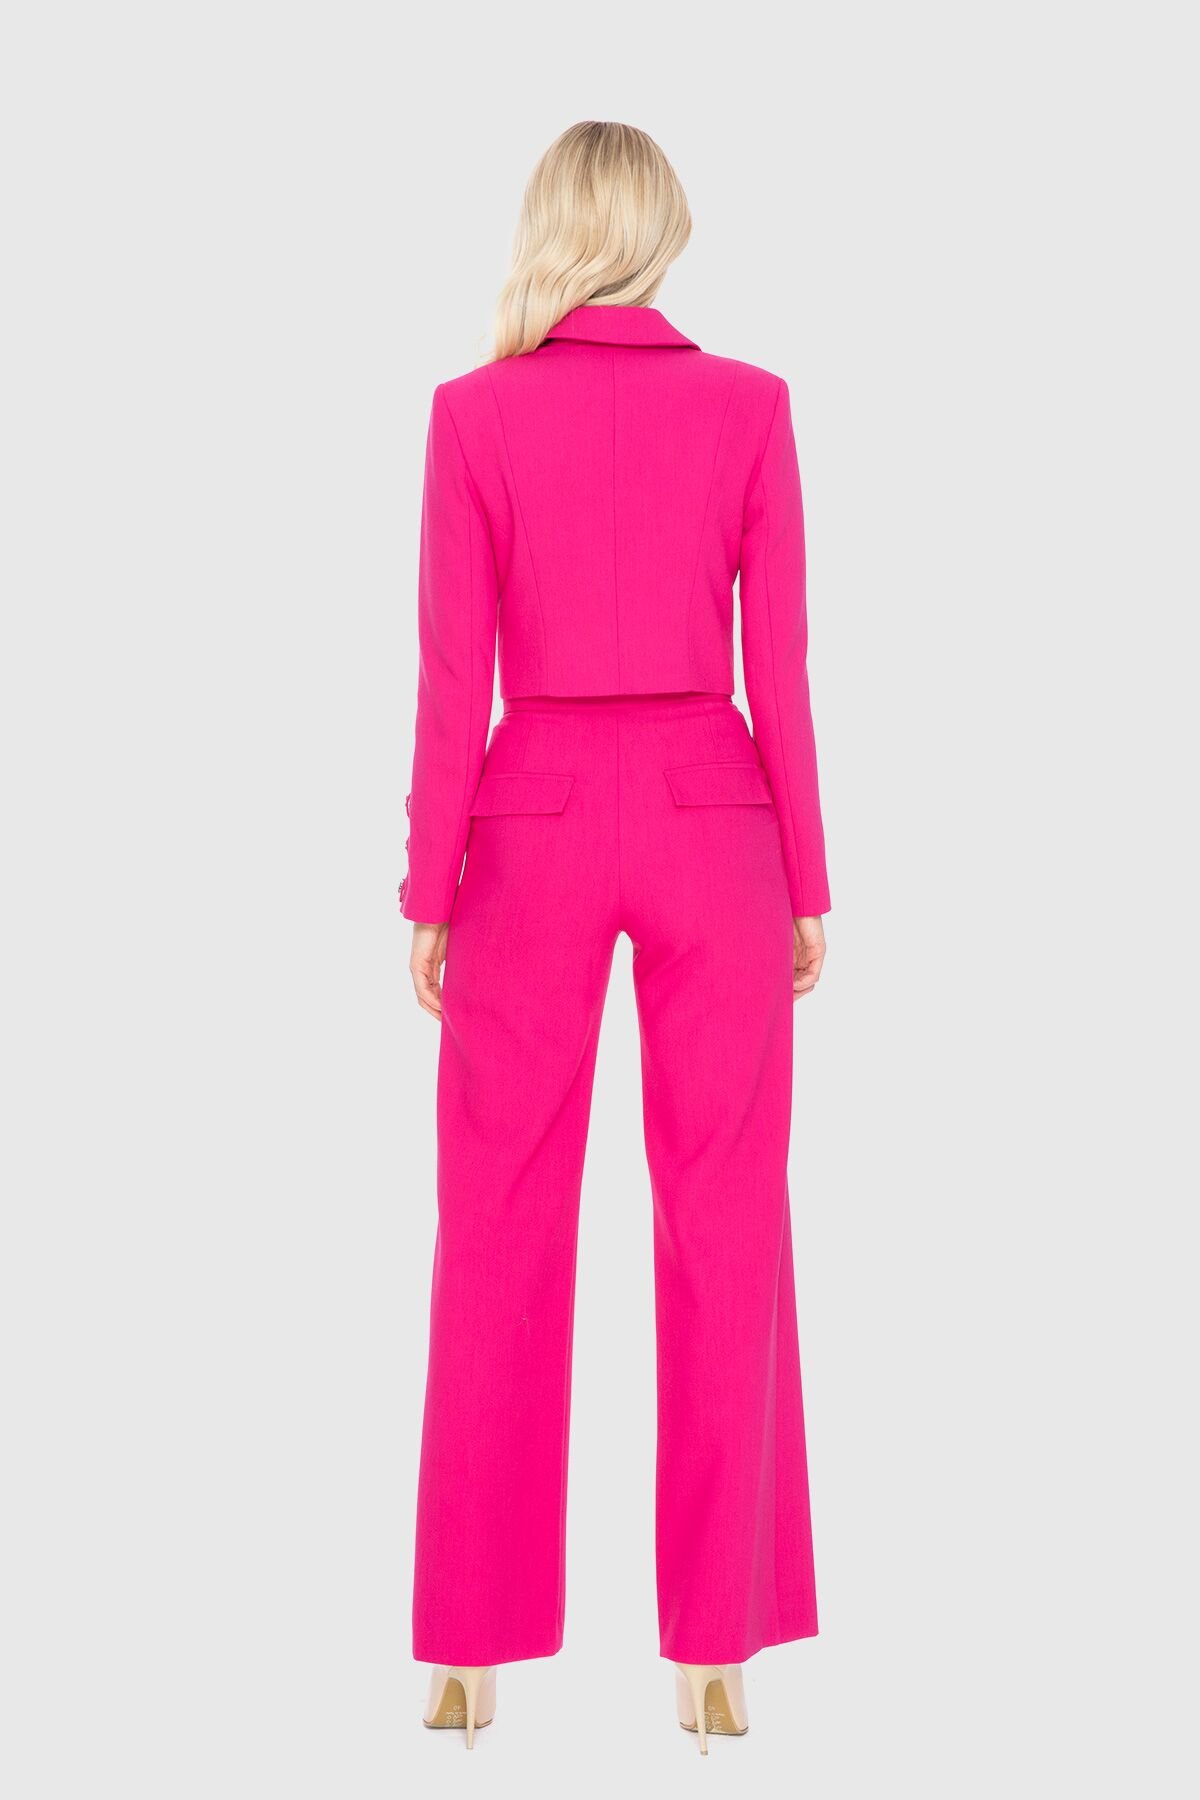 Bow Detailed Crop Pink Jacket